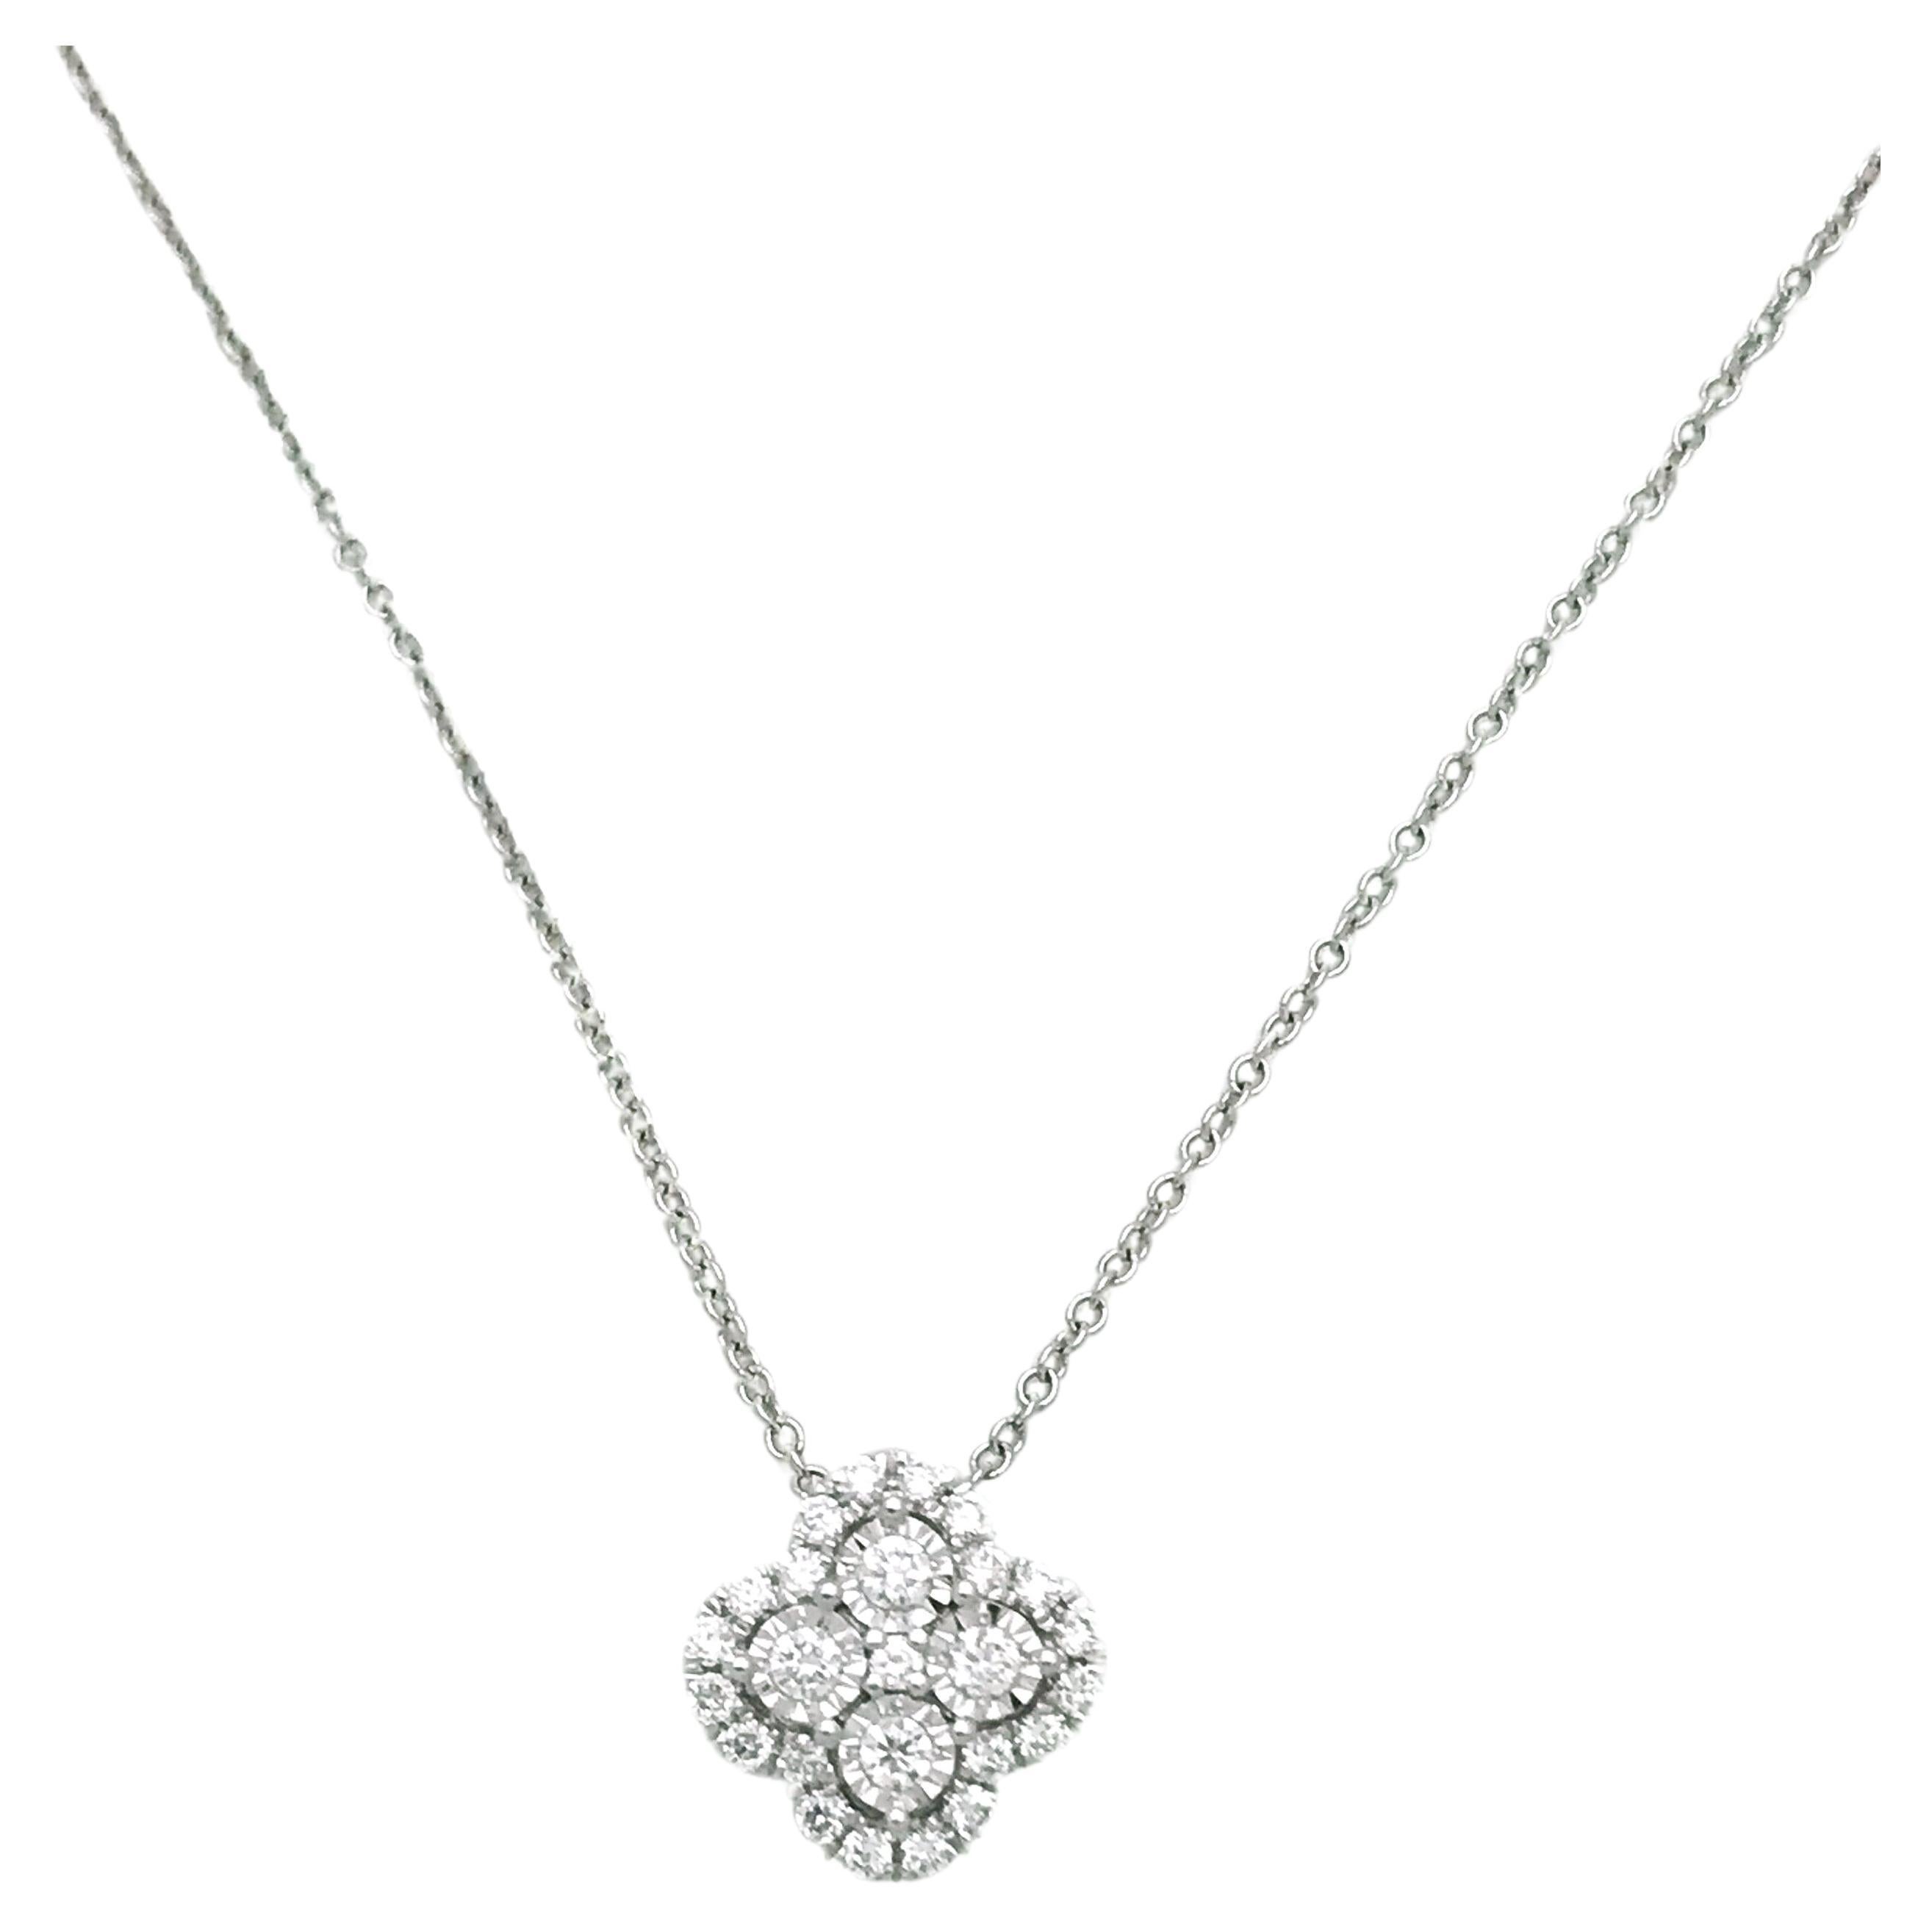 Diamond Halo Necklace, White Gold, Diamond van cleef clover Pendant For Sale